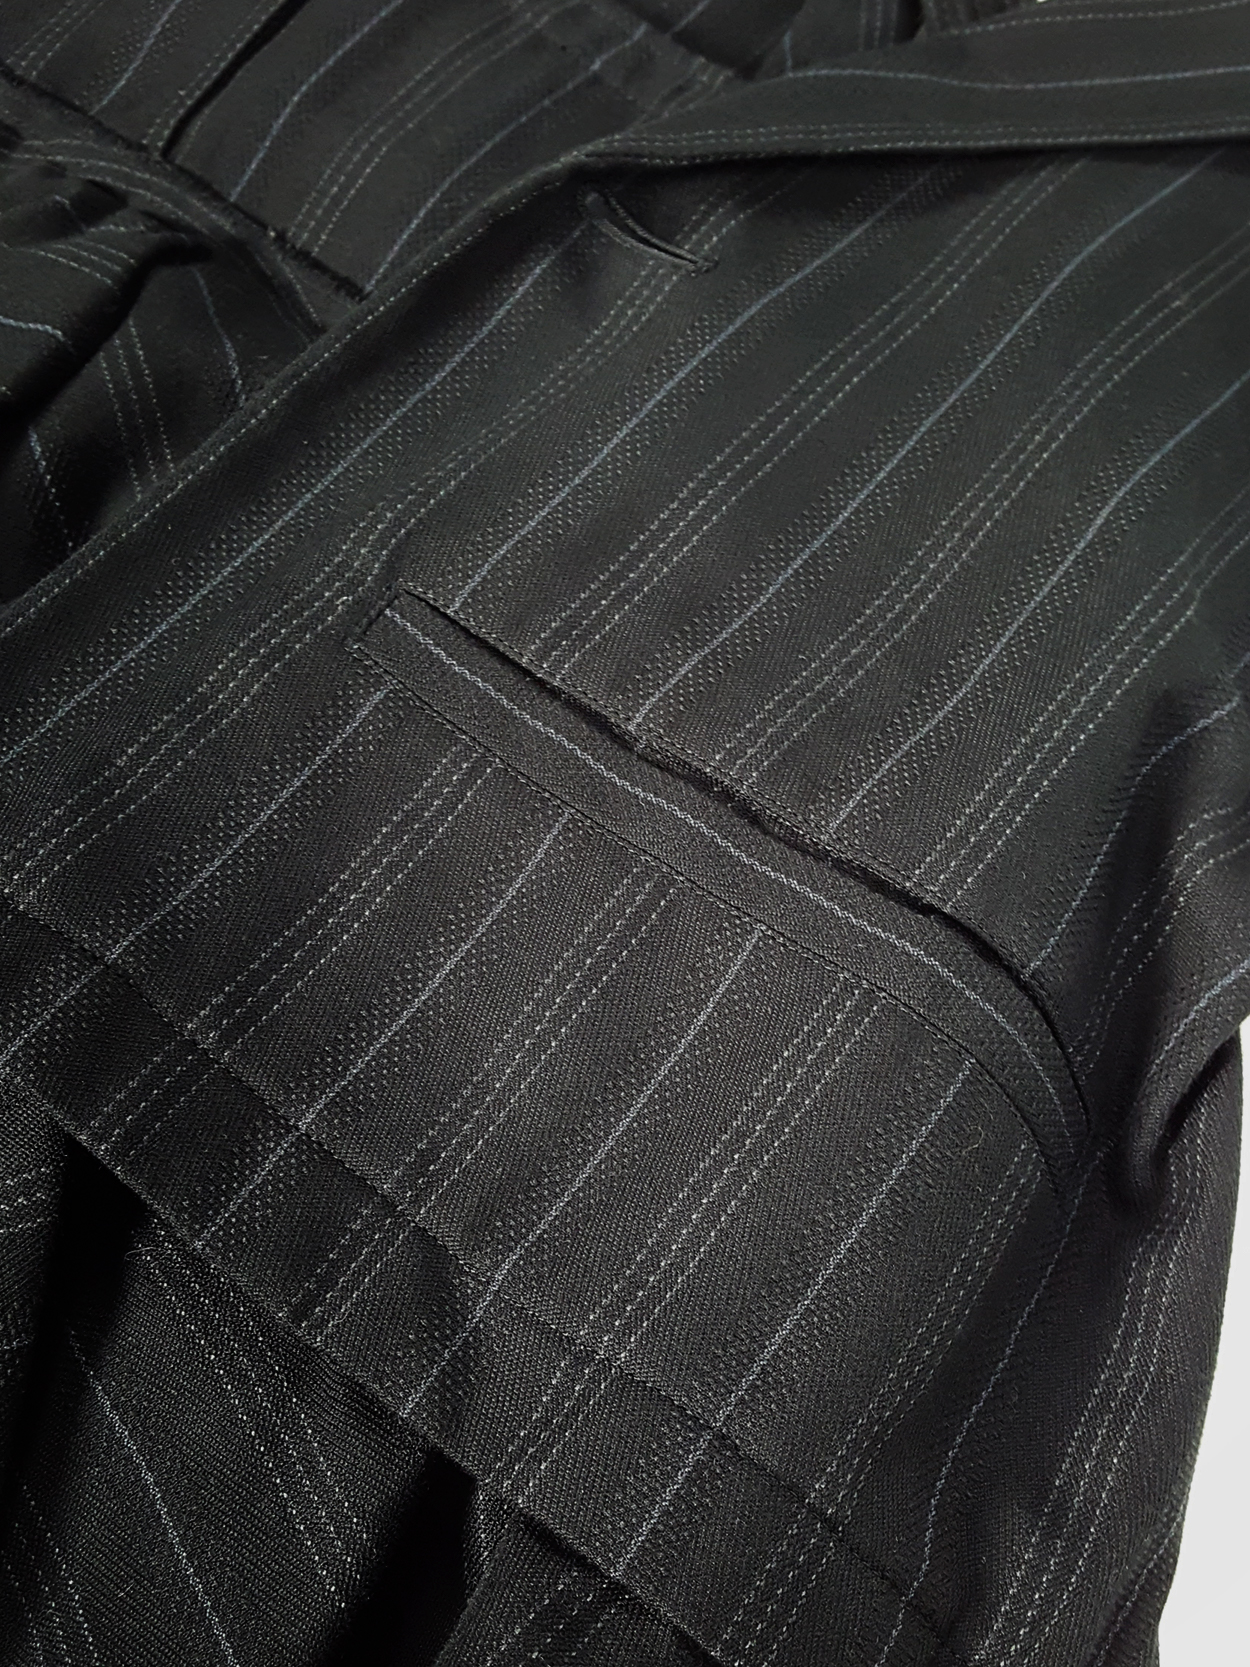 Limi Feu black long backless waistcoat with ruffled bottom - V A N II T A S